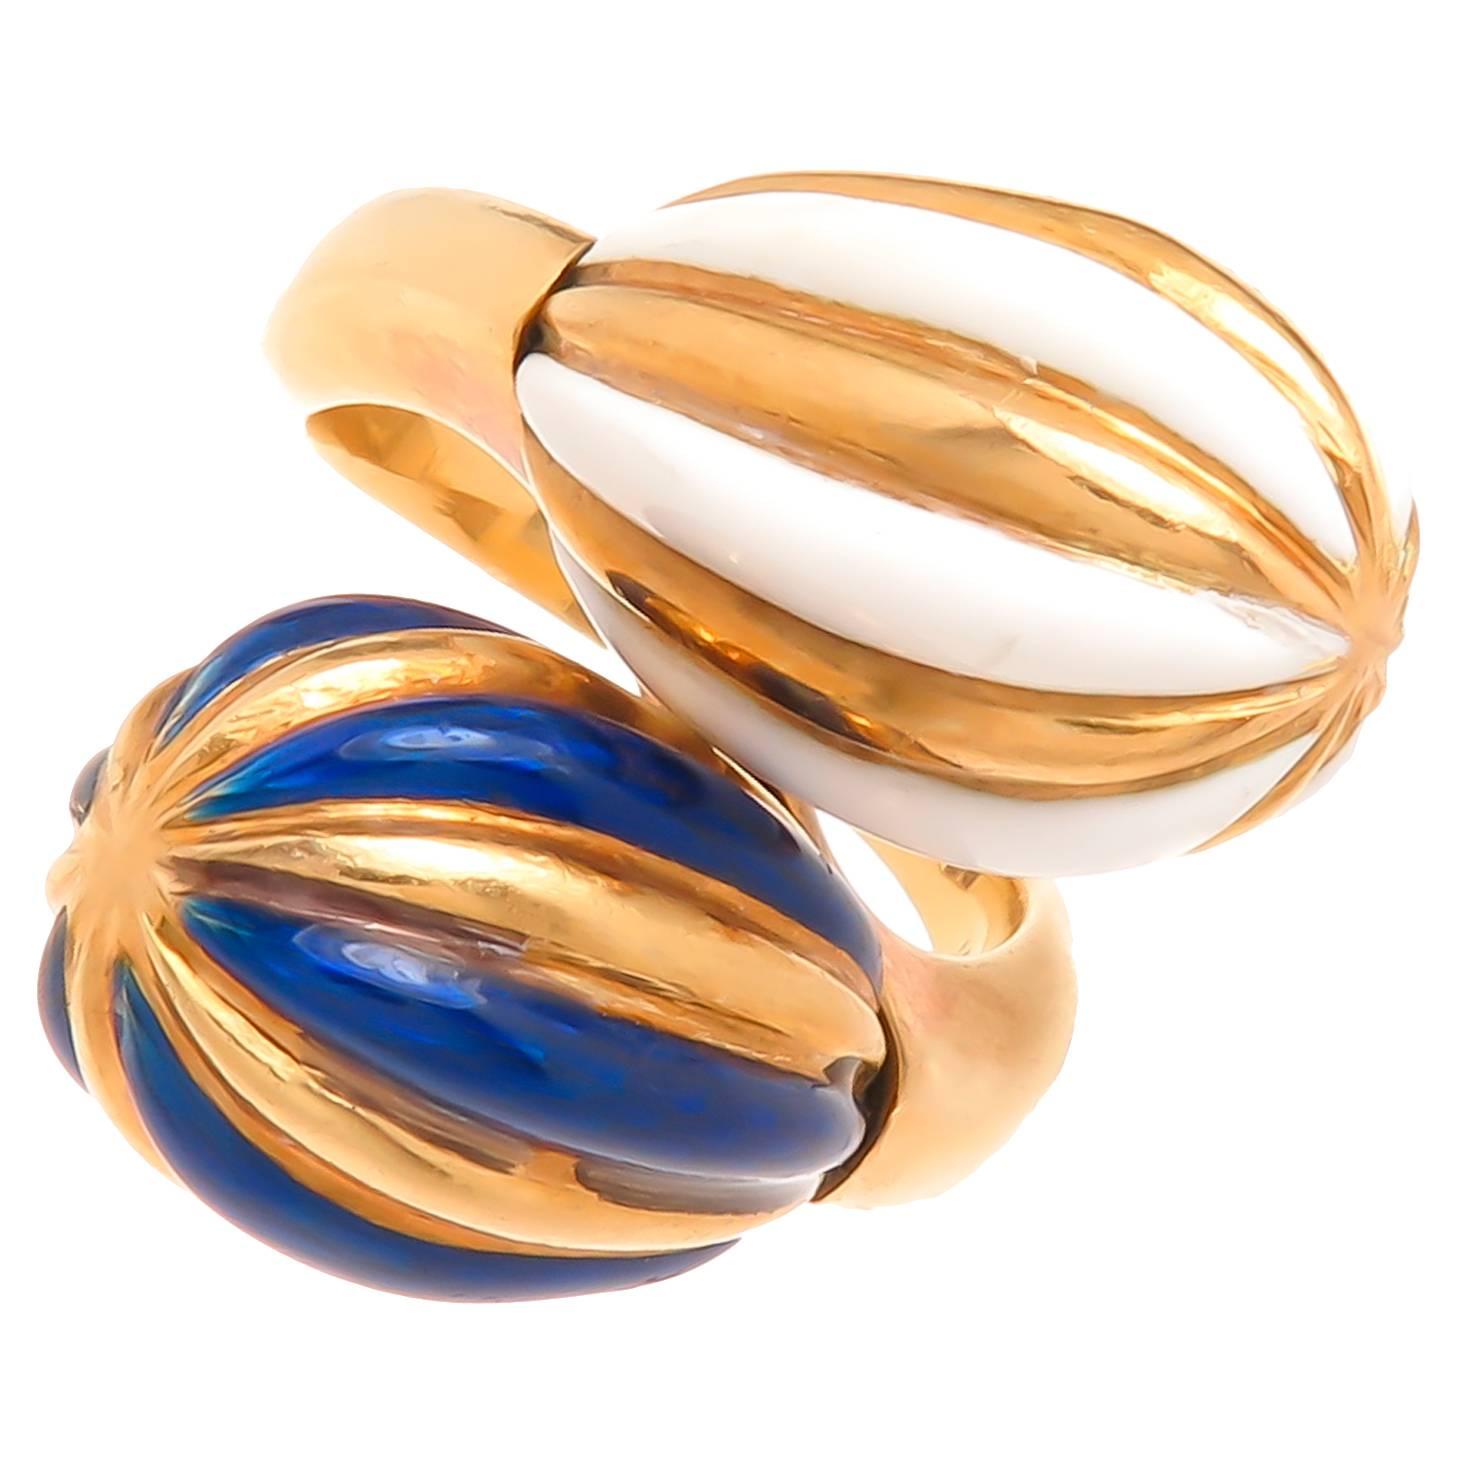 1980s Cartier Enamel Gold Ring Worn by Joan Collins